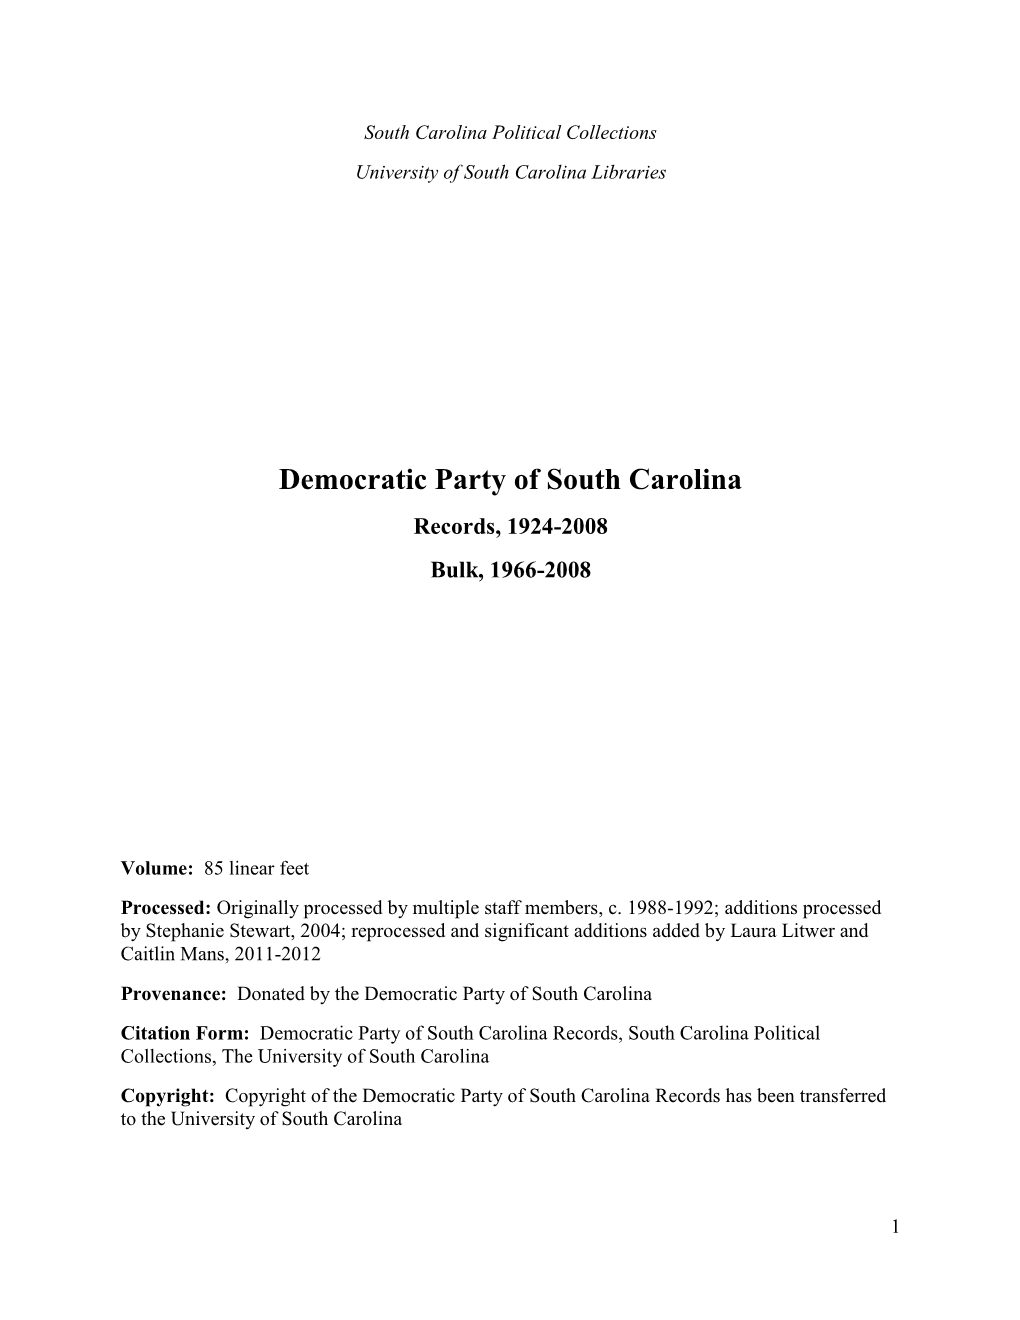 Democratic Party of South Carolina Records, 1924-2008 Bulk, 1966-2008